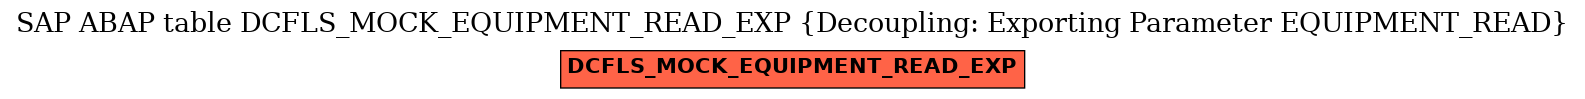 E-R Diagram for table DCFLS_MOCK_EQUIPMENT_READ_EXP (Decoupling: Exporting Parameter EQUIPMENT_READ)